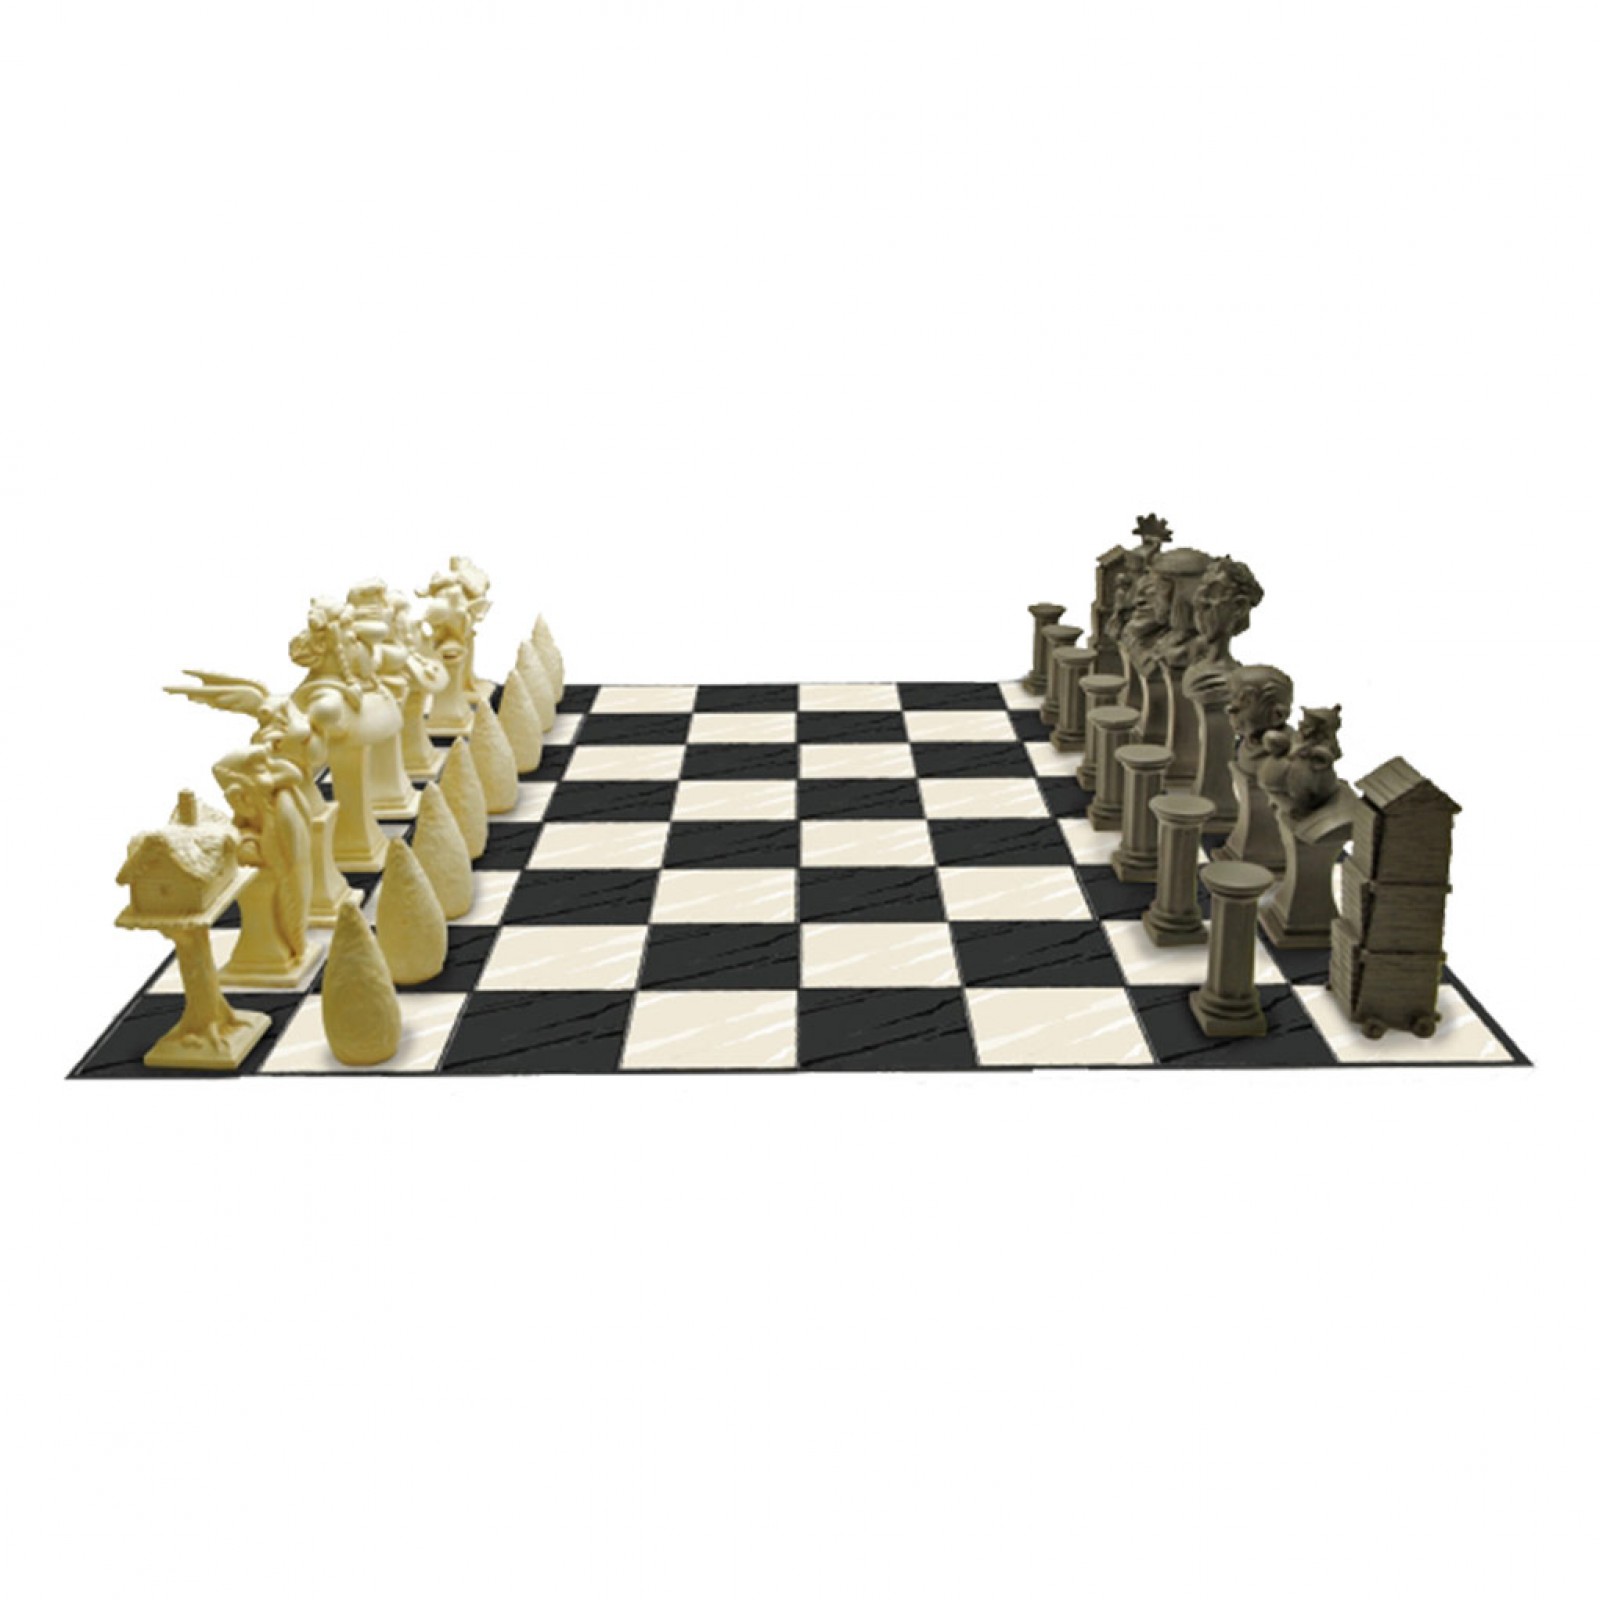 disposition on enochian chess